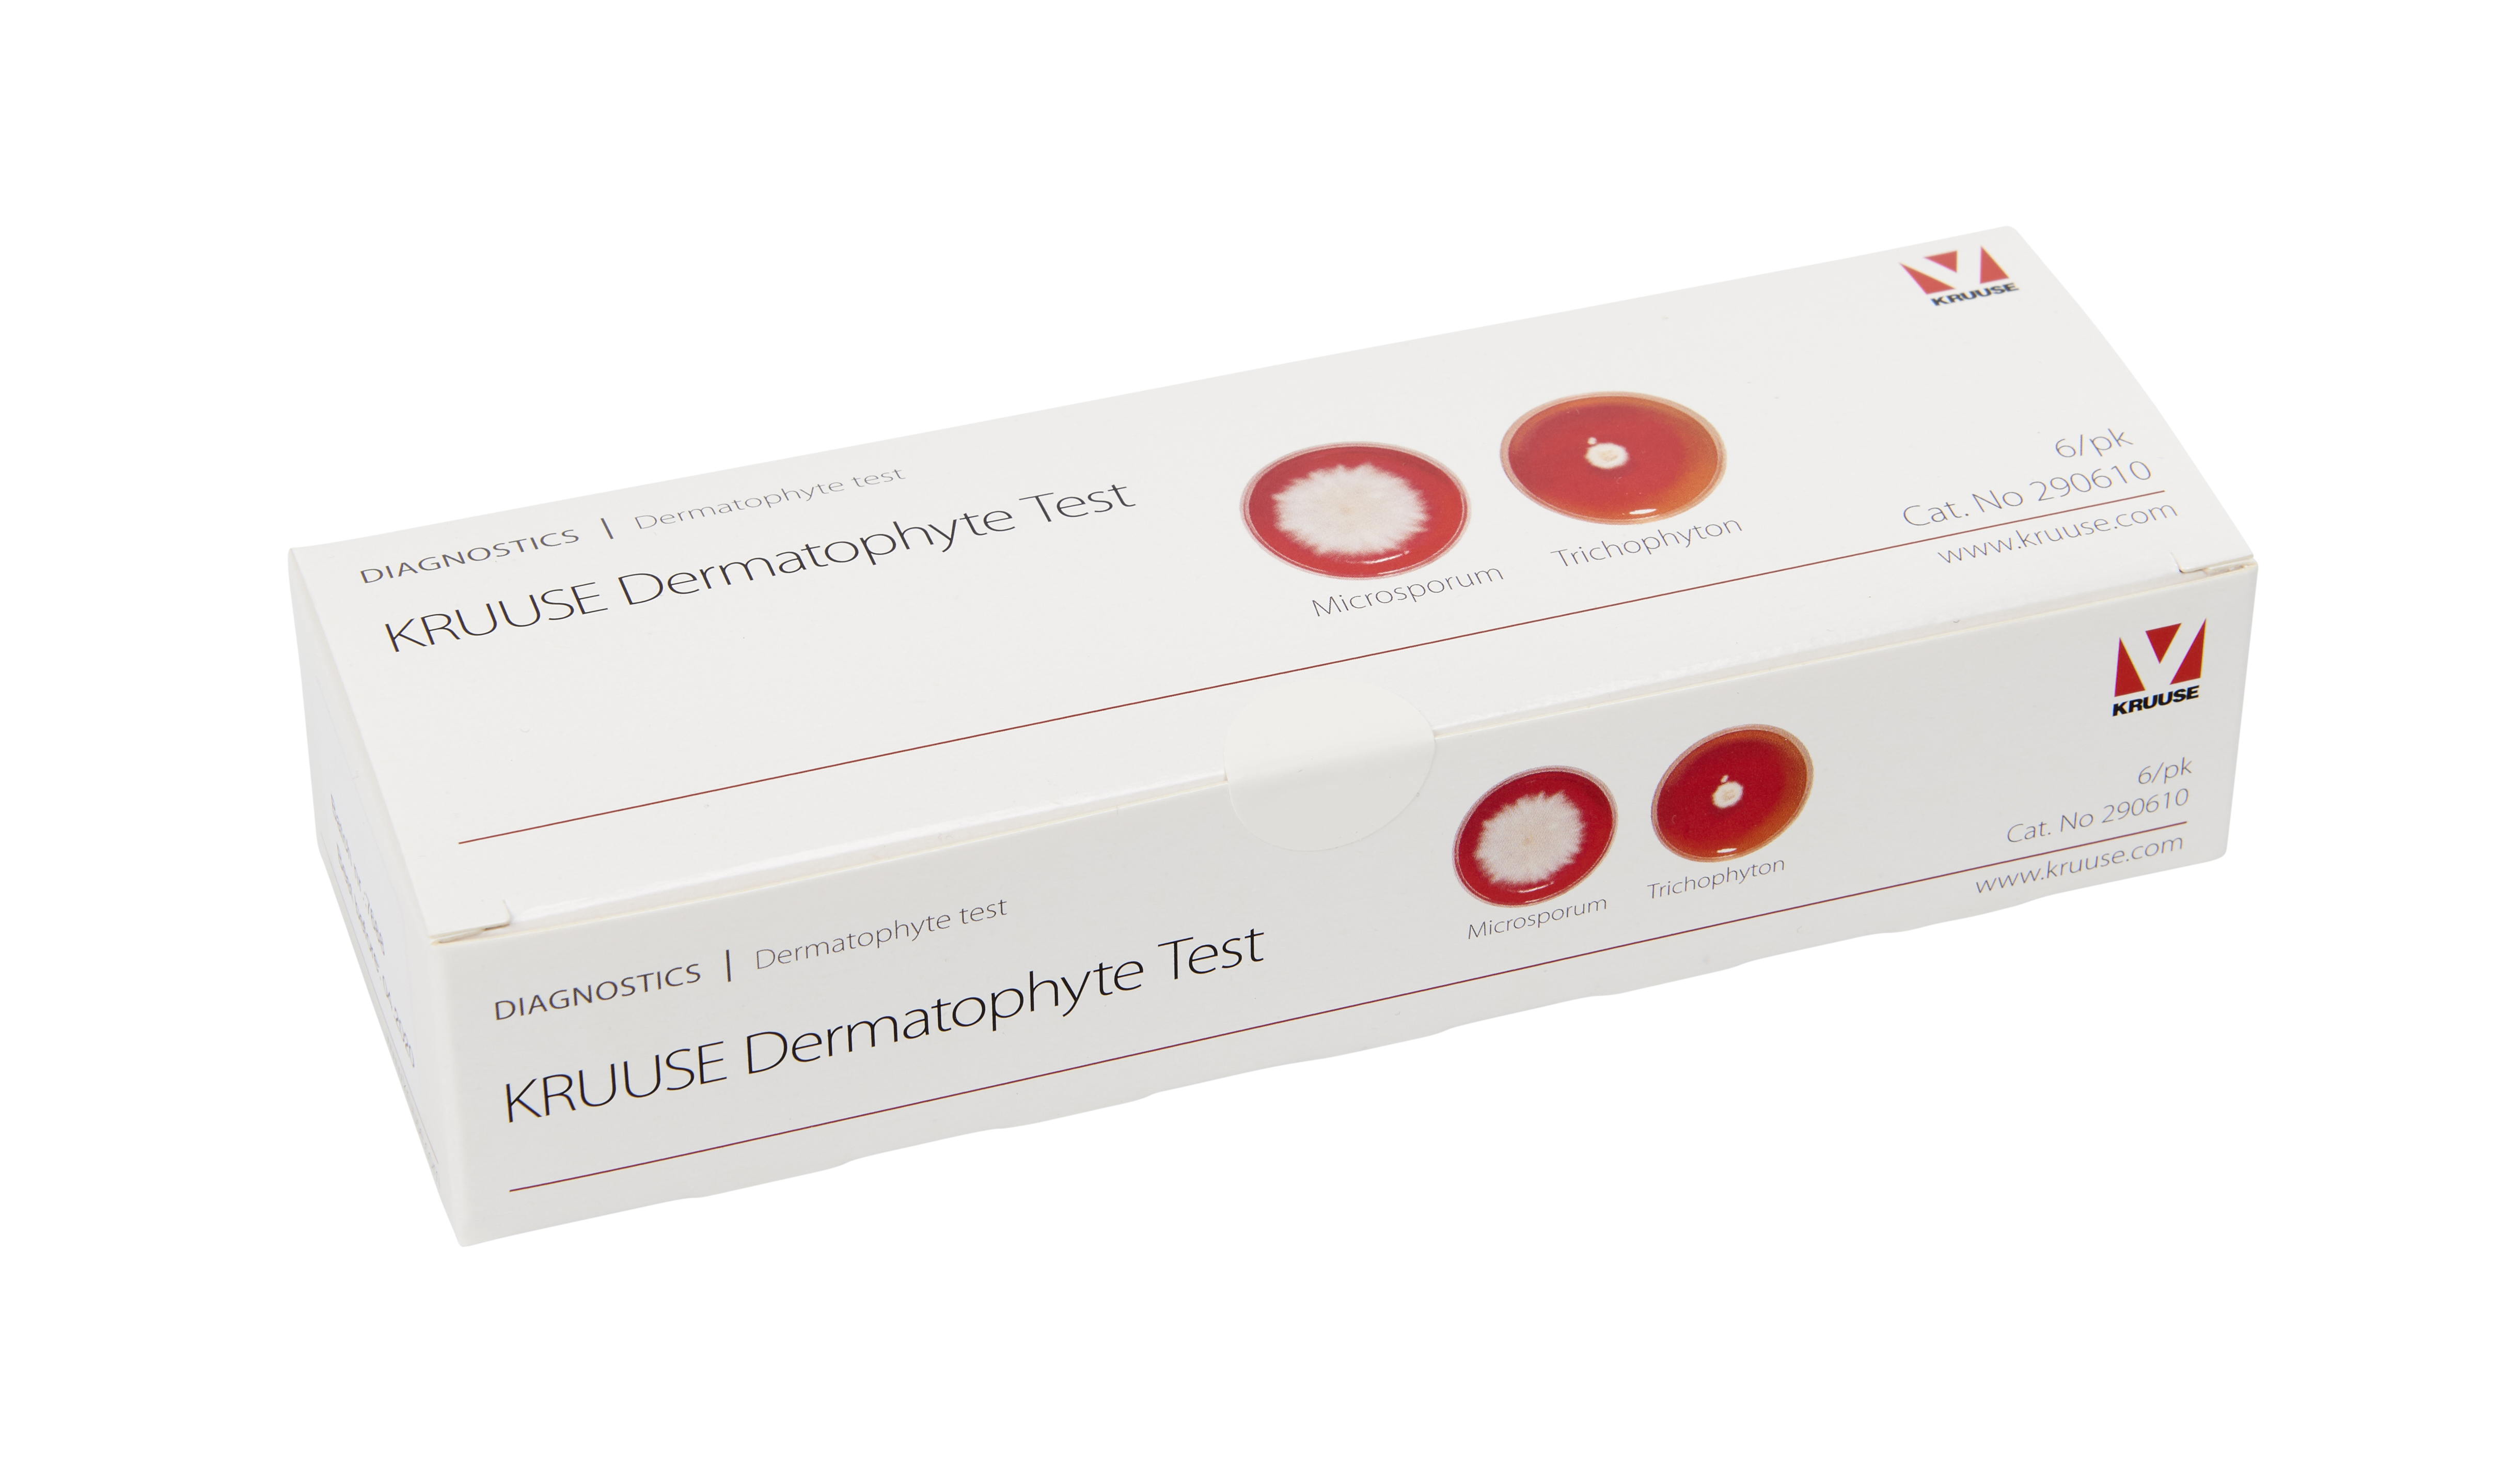 KRUUSE Dermatophyte test 6/pk